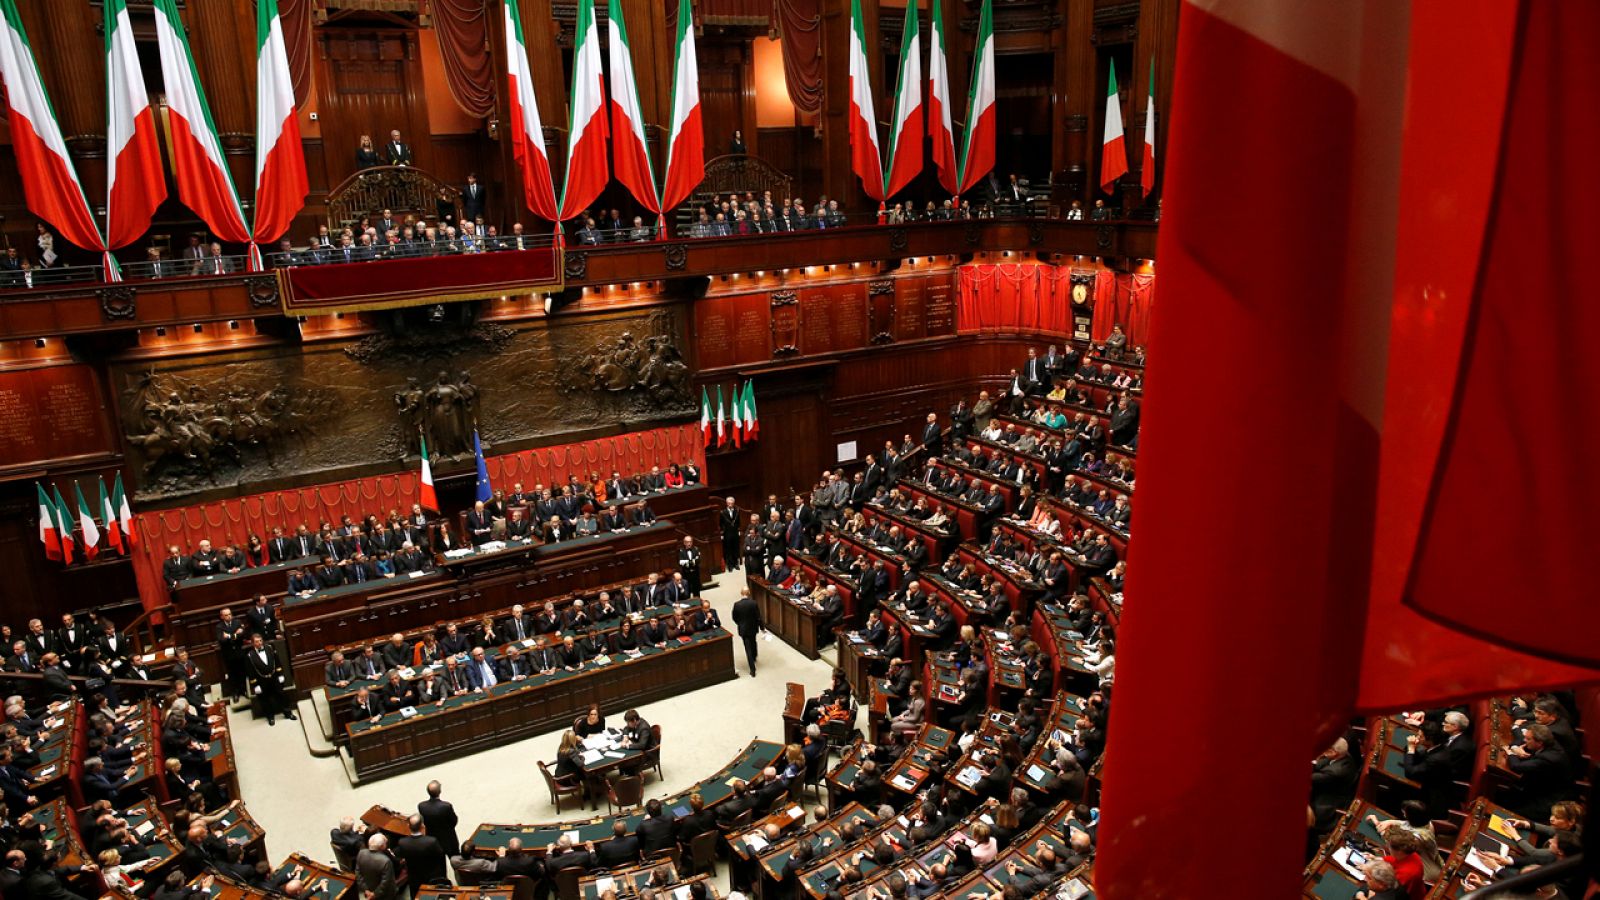 Una vista general del Parlamento italiano